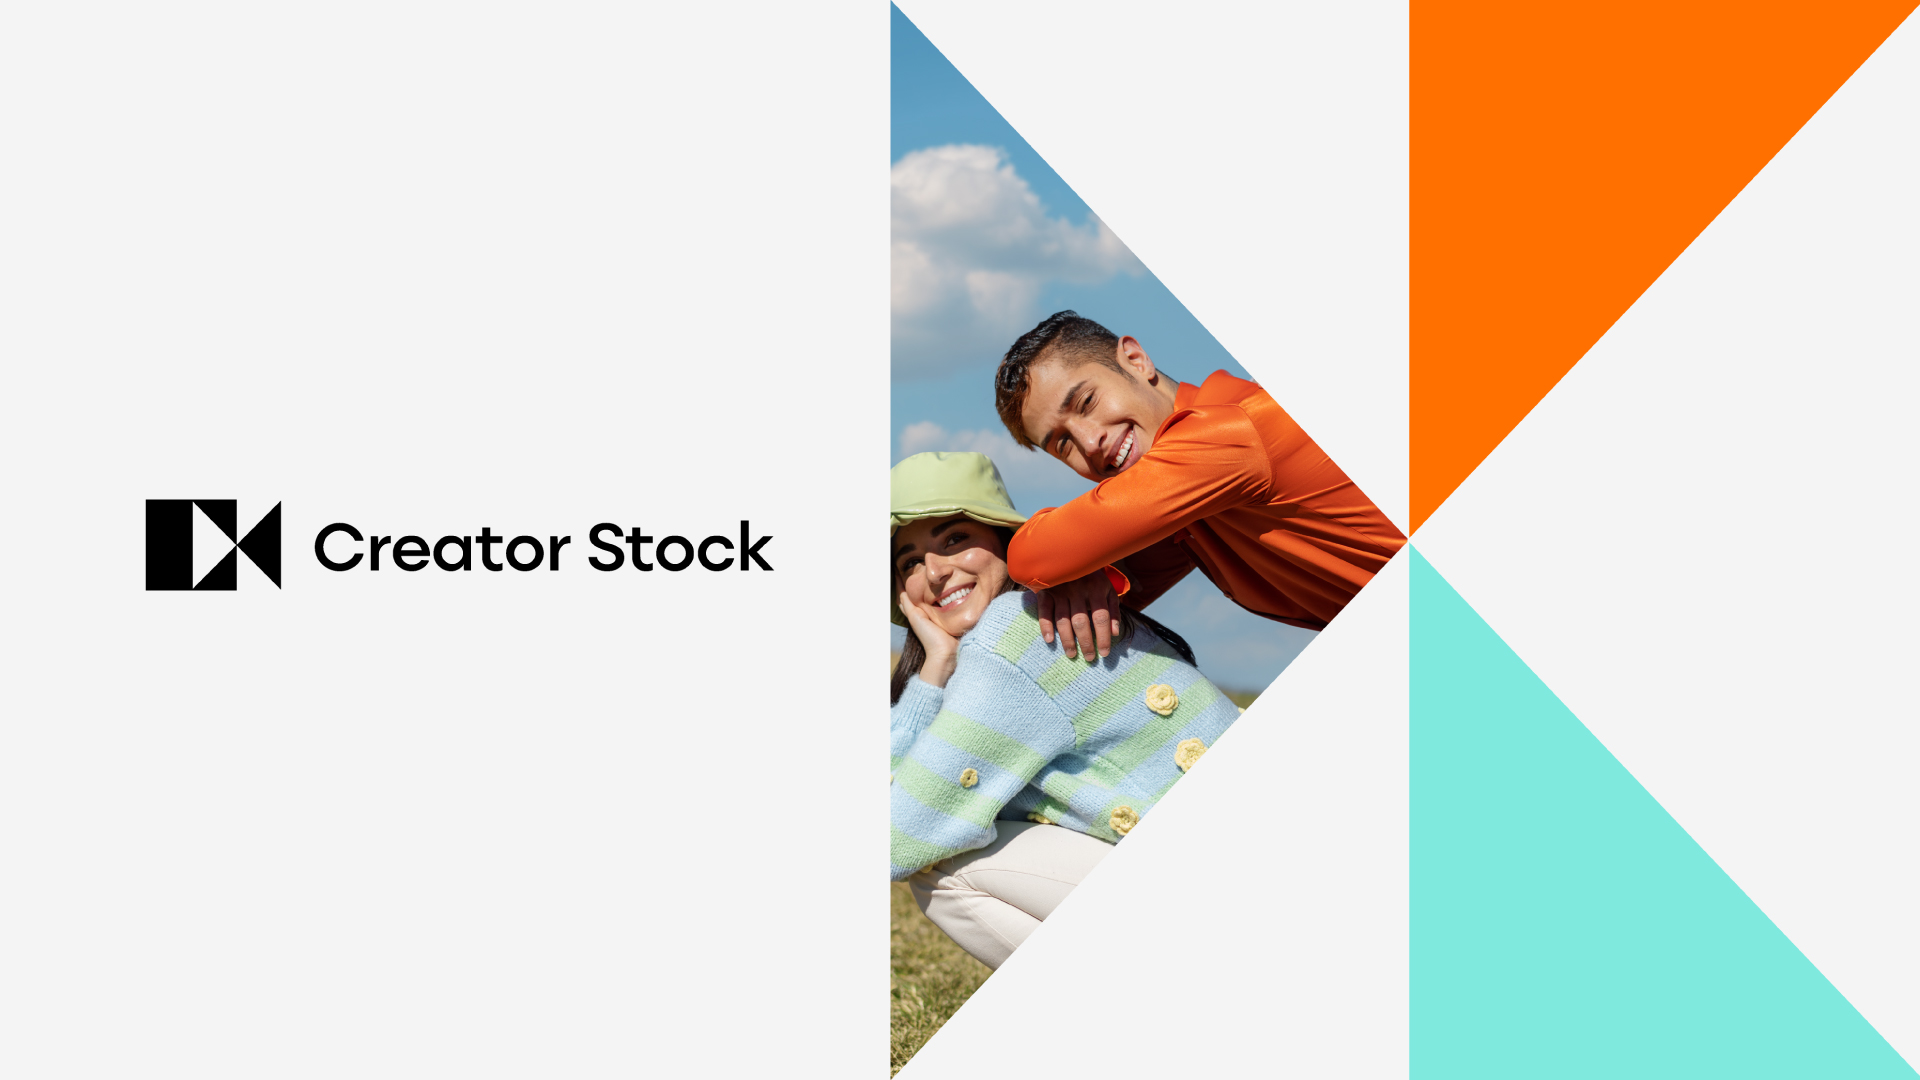 Creator Stock